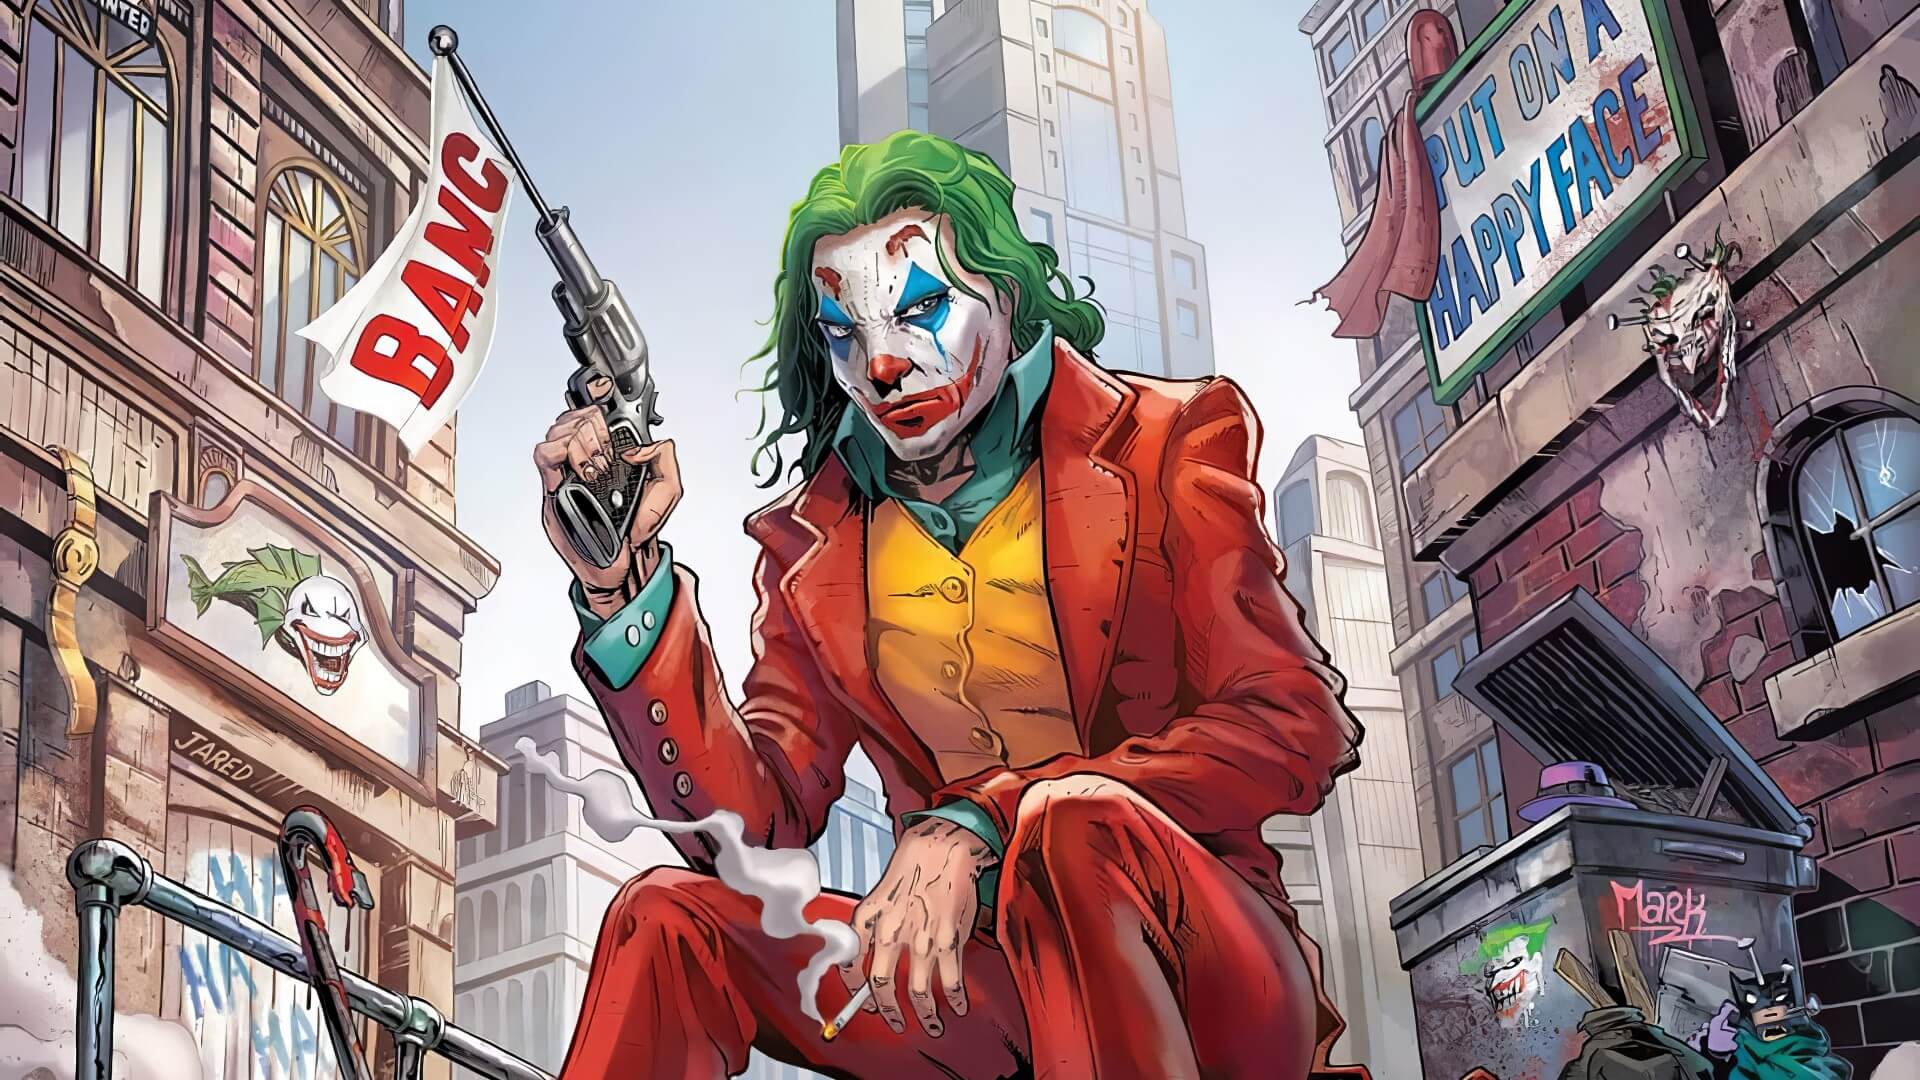 Hình nền Joker đẹp